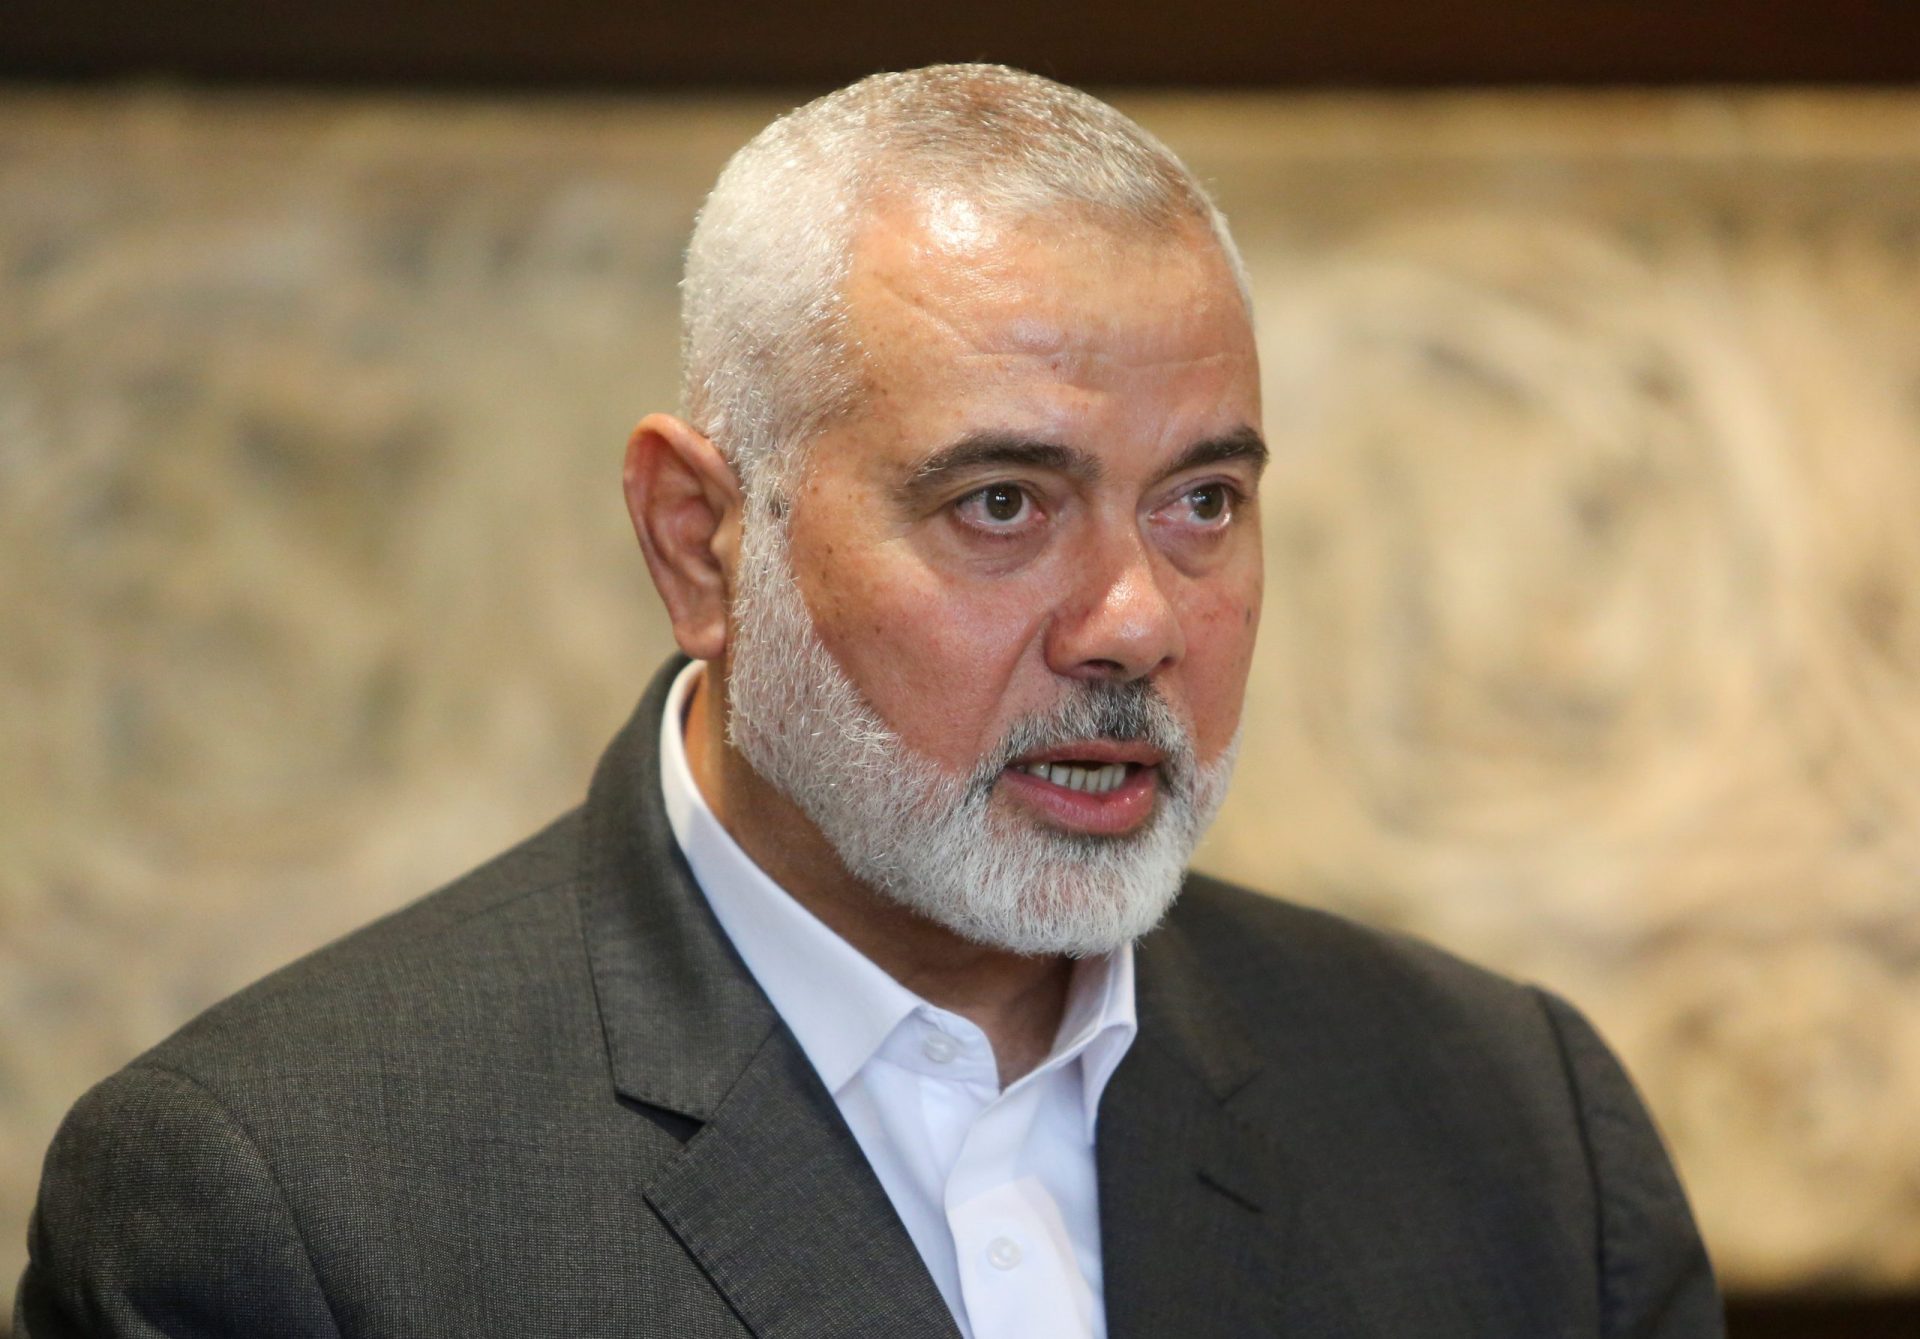 Chef du Hamas accuse Israël de massacres barbares après attaque d'un camp de réfugiés